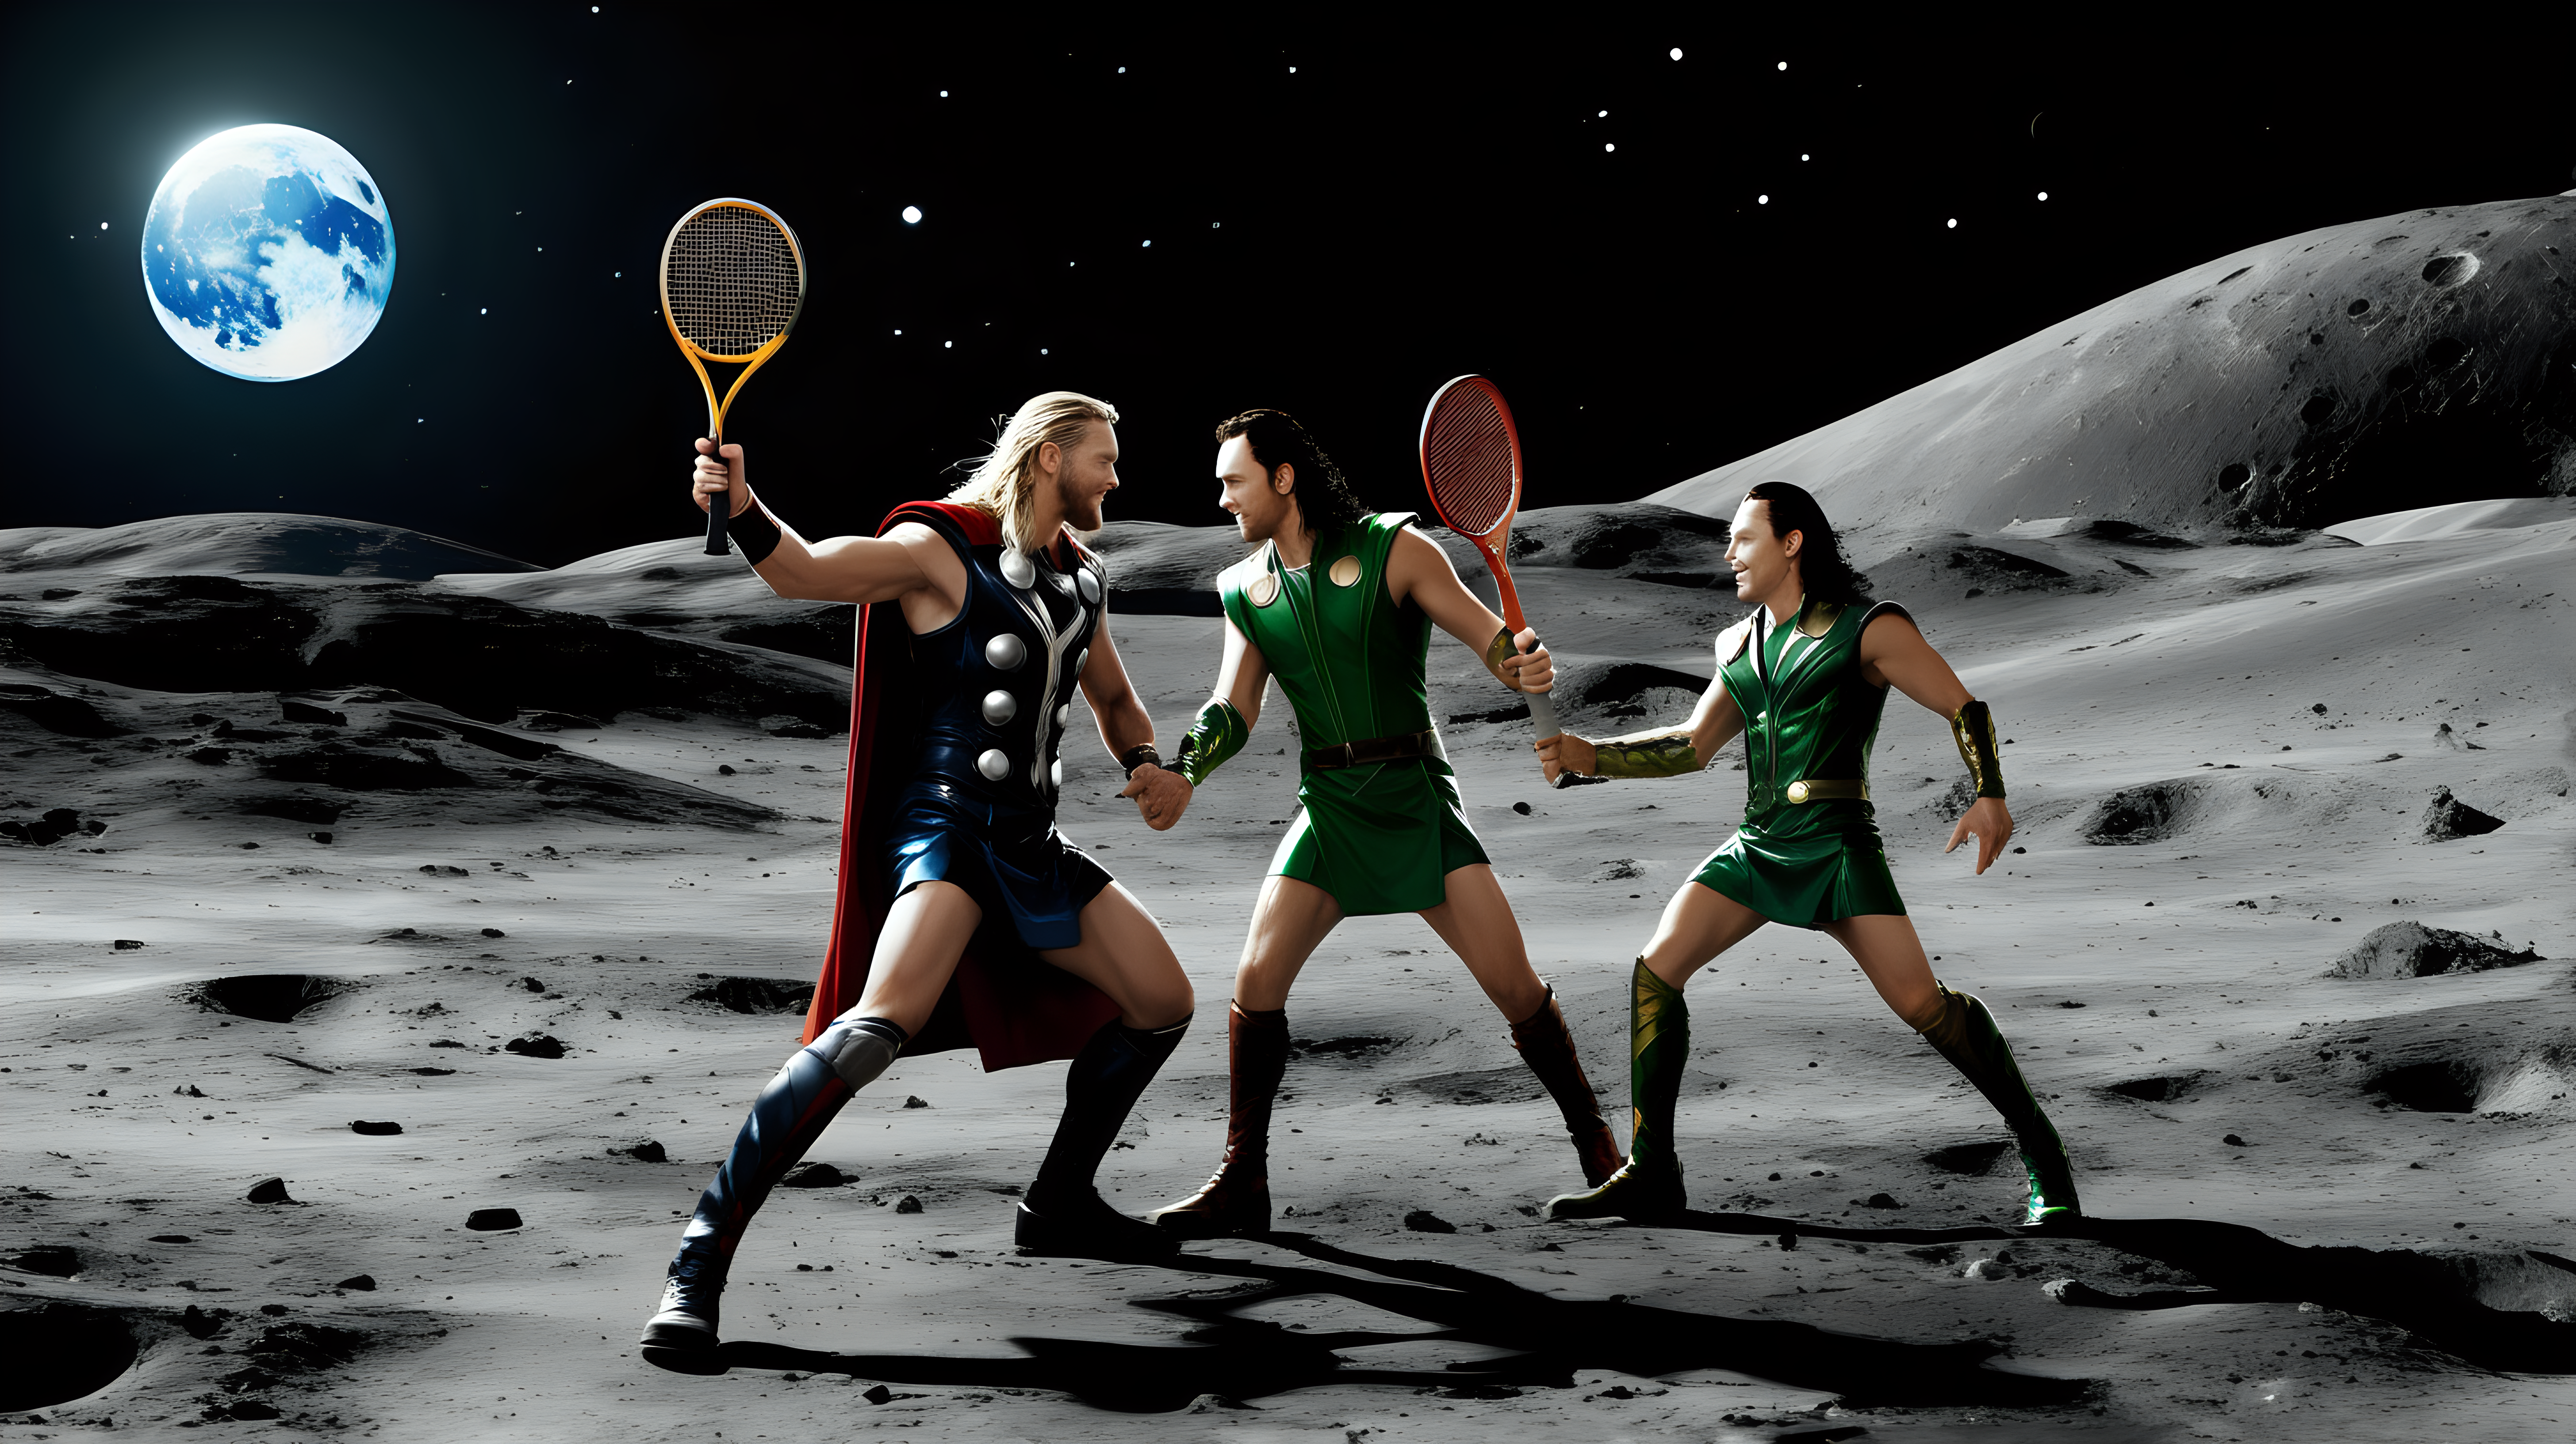 Thor and Loki playing tennis on the moon